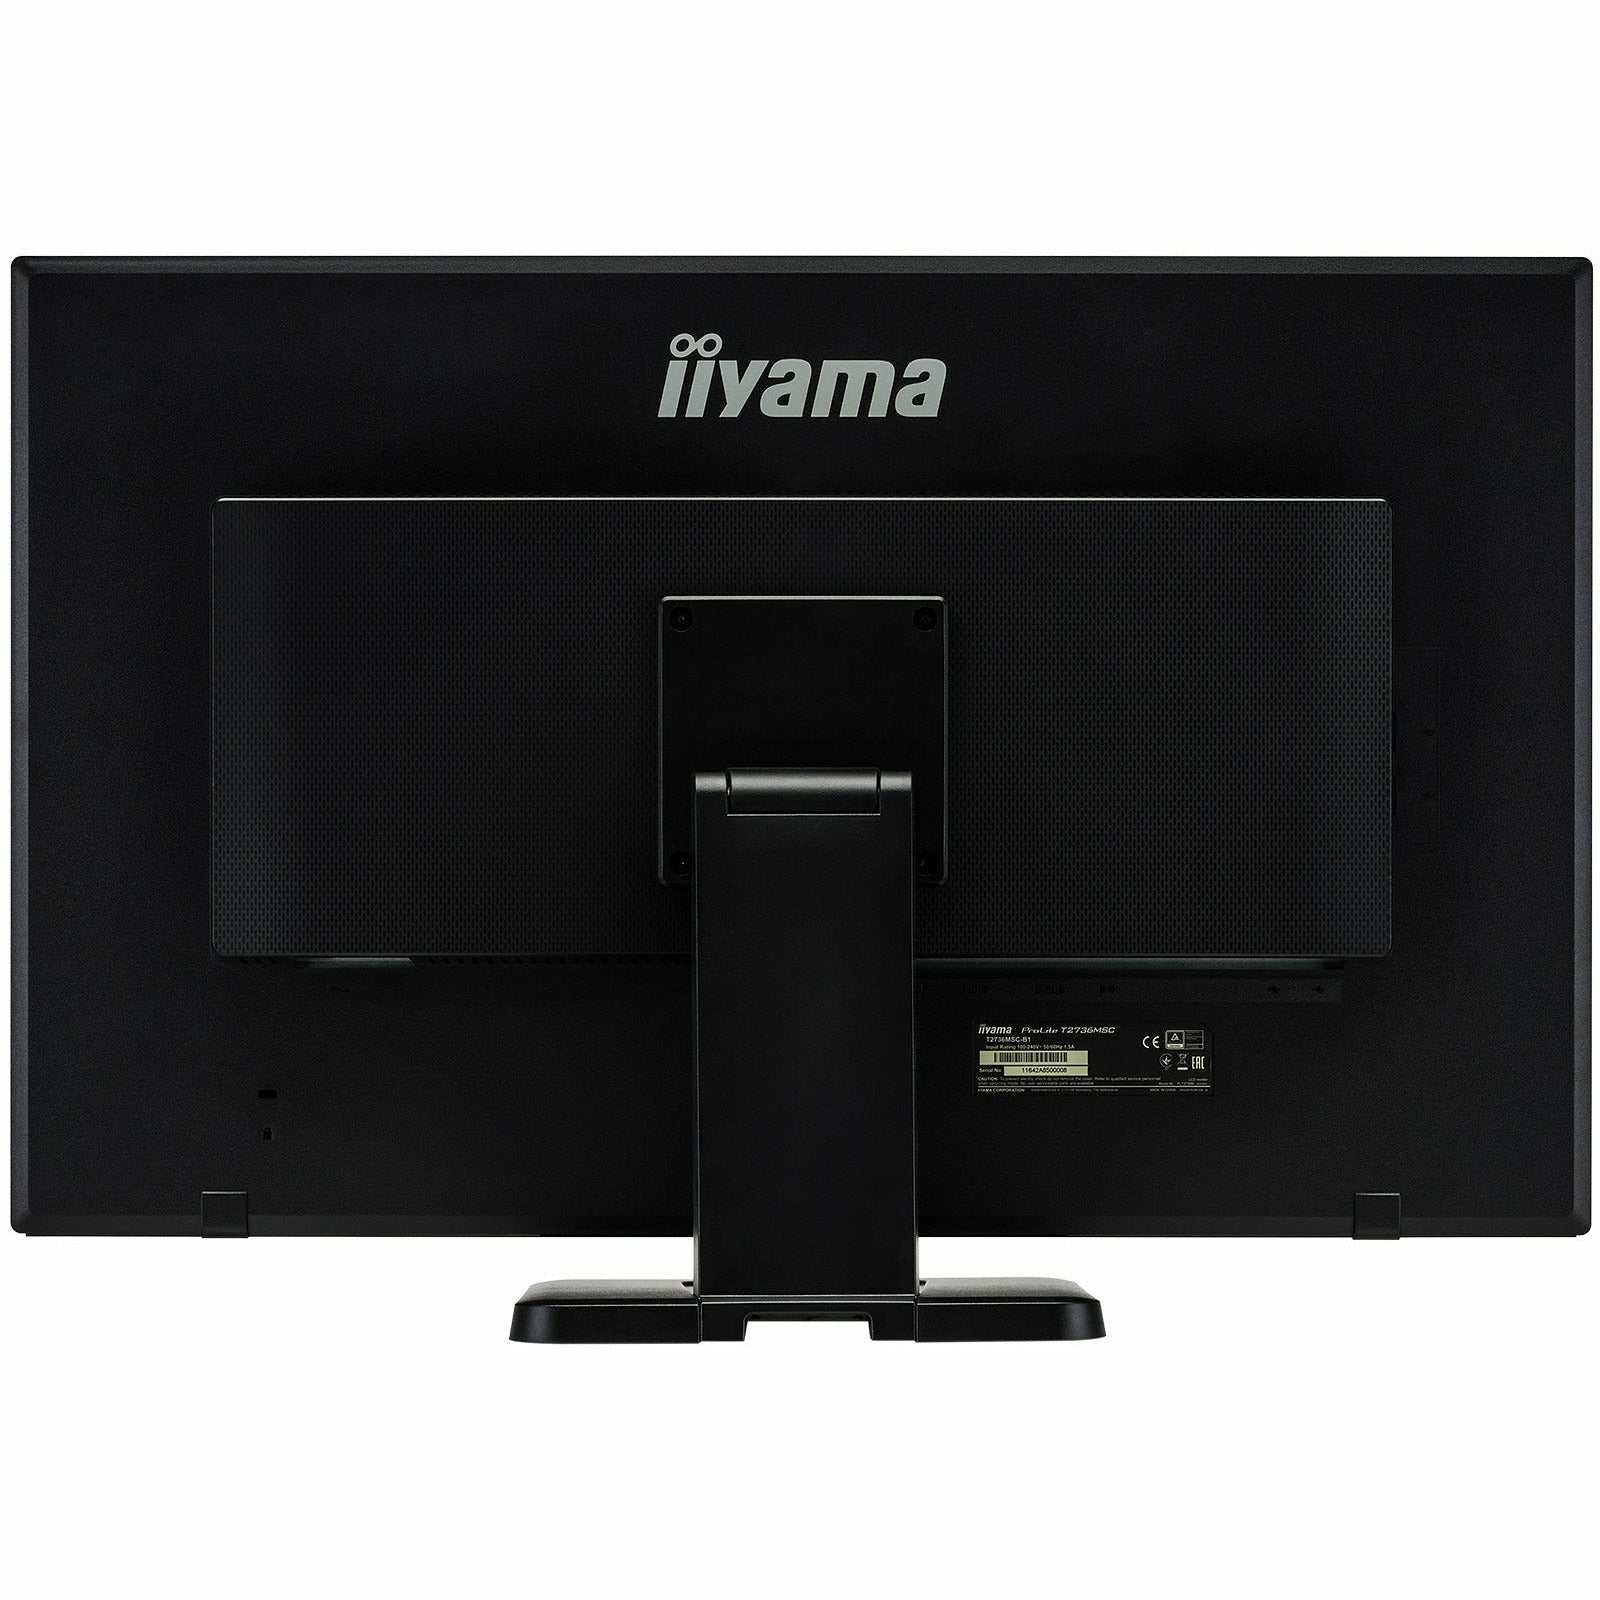 iiyama ProLite T2736MSC-B1 27" Touch Screen Display